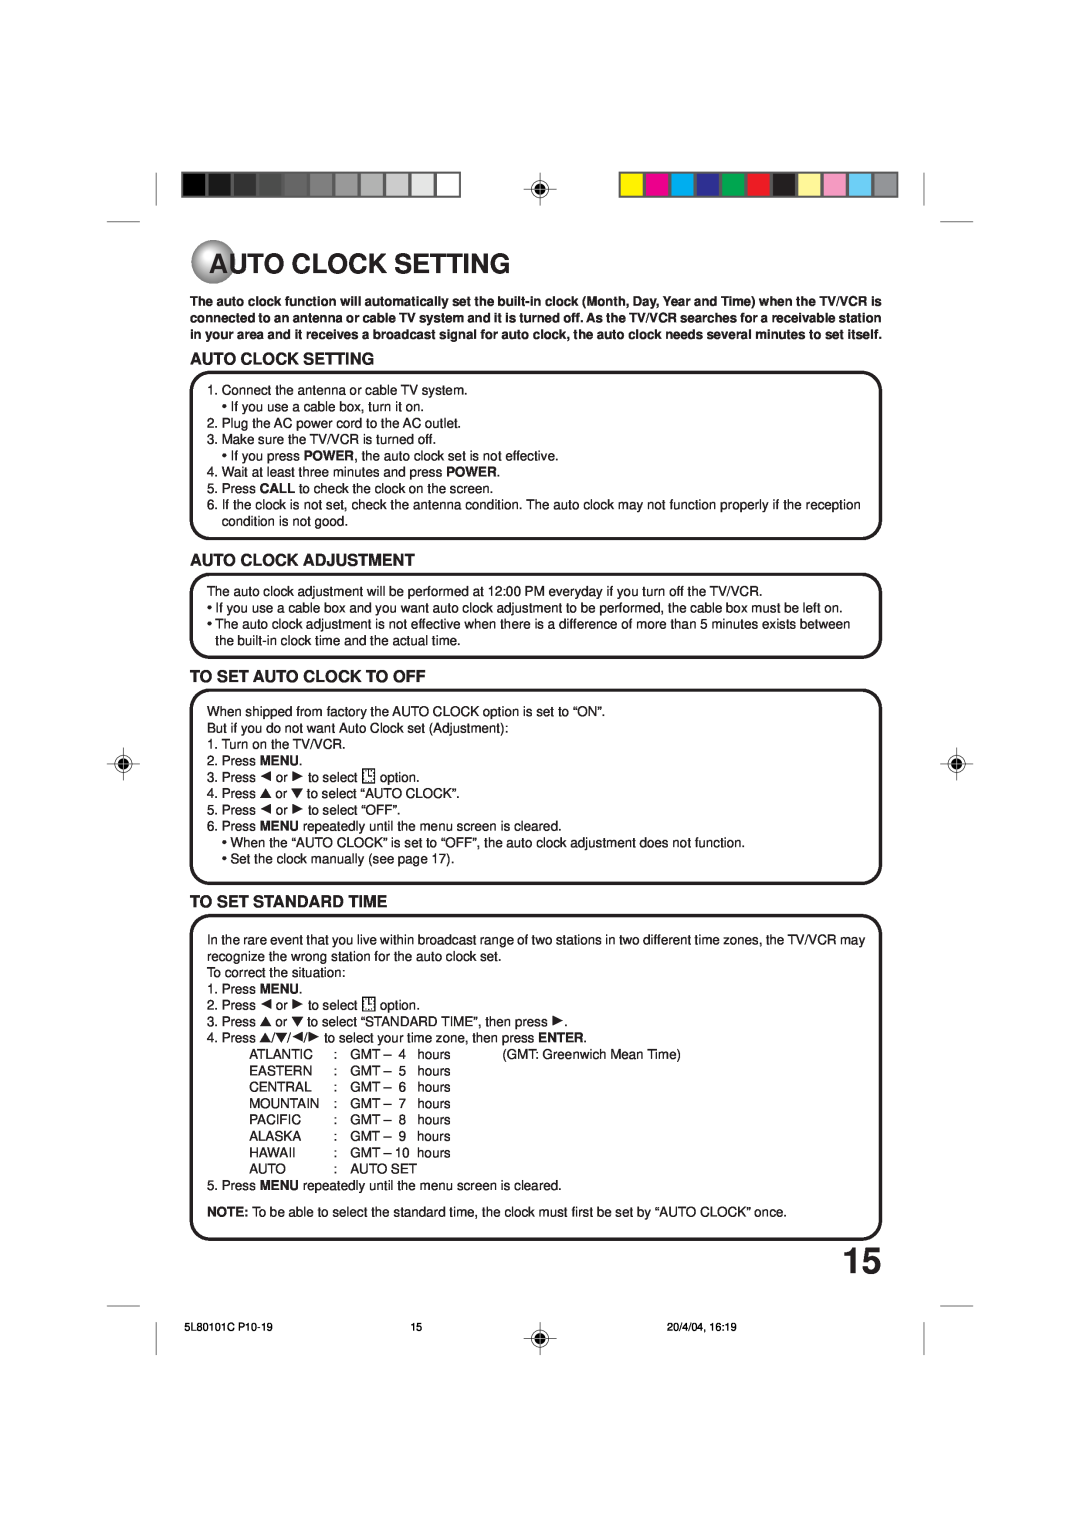 Toshiba MV13P2 owner manual Auto Clock Setting, Auto Clock Adjustment, To Set Auto Clock To Off, To Set Standard Time 